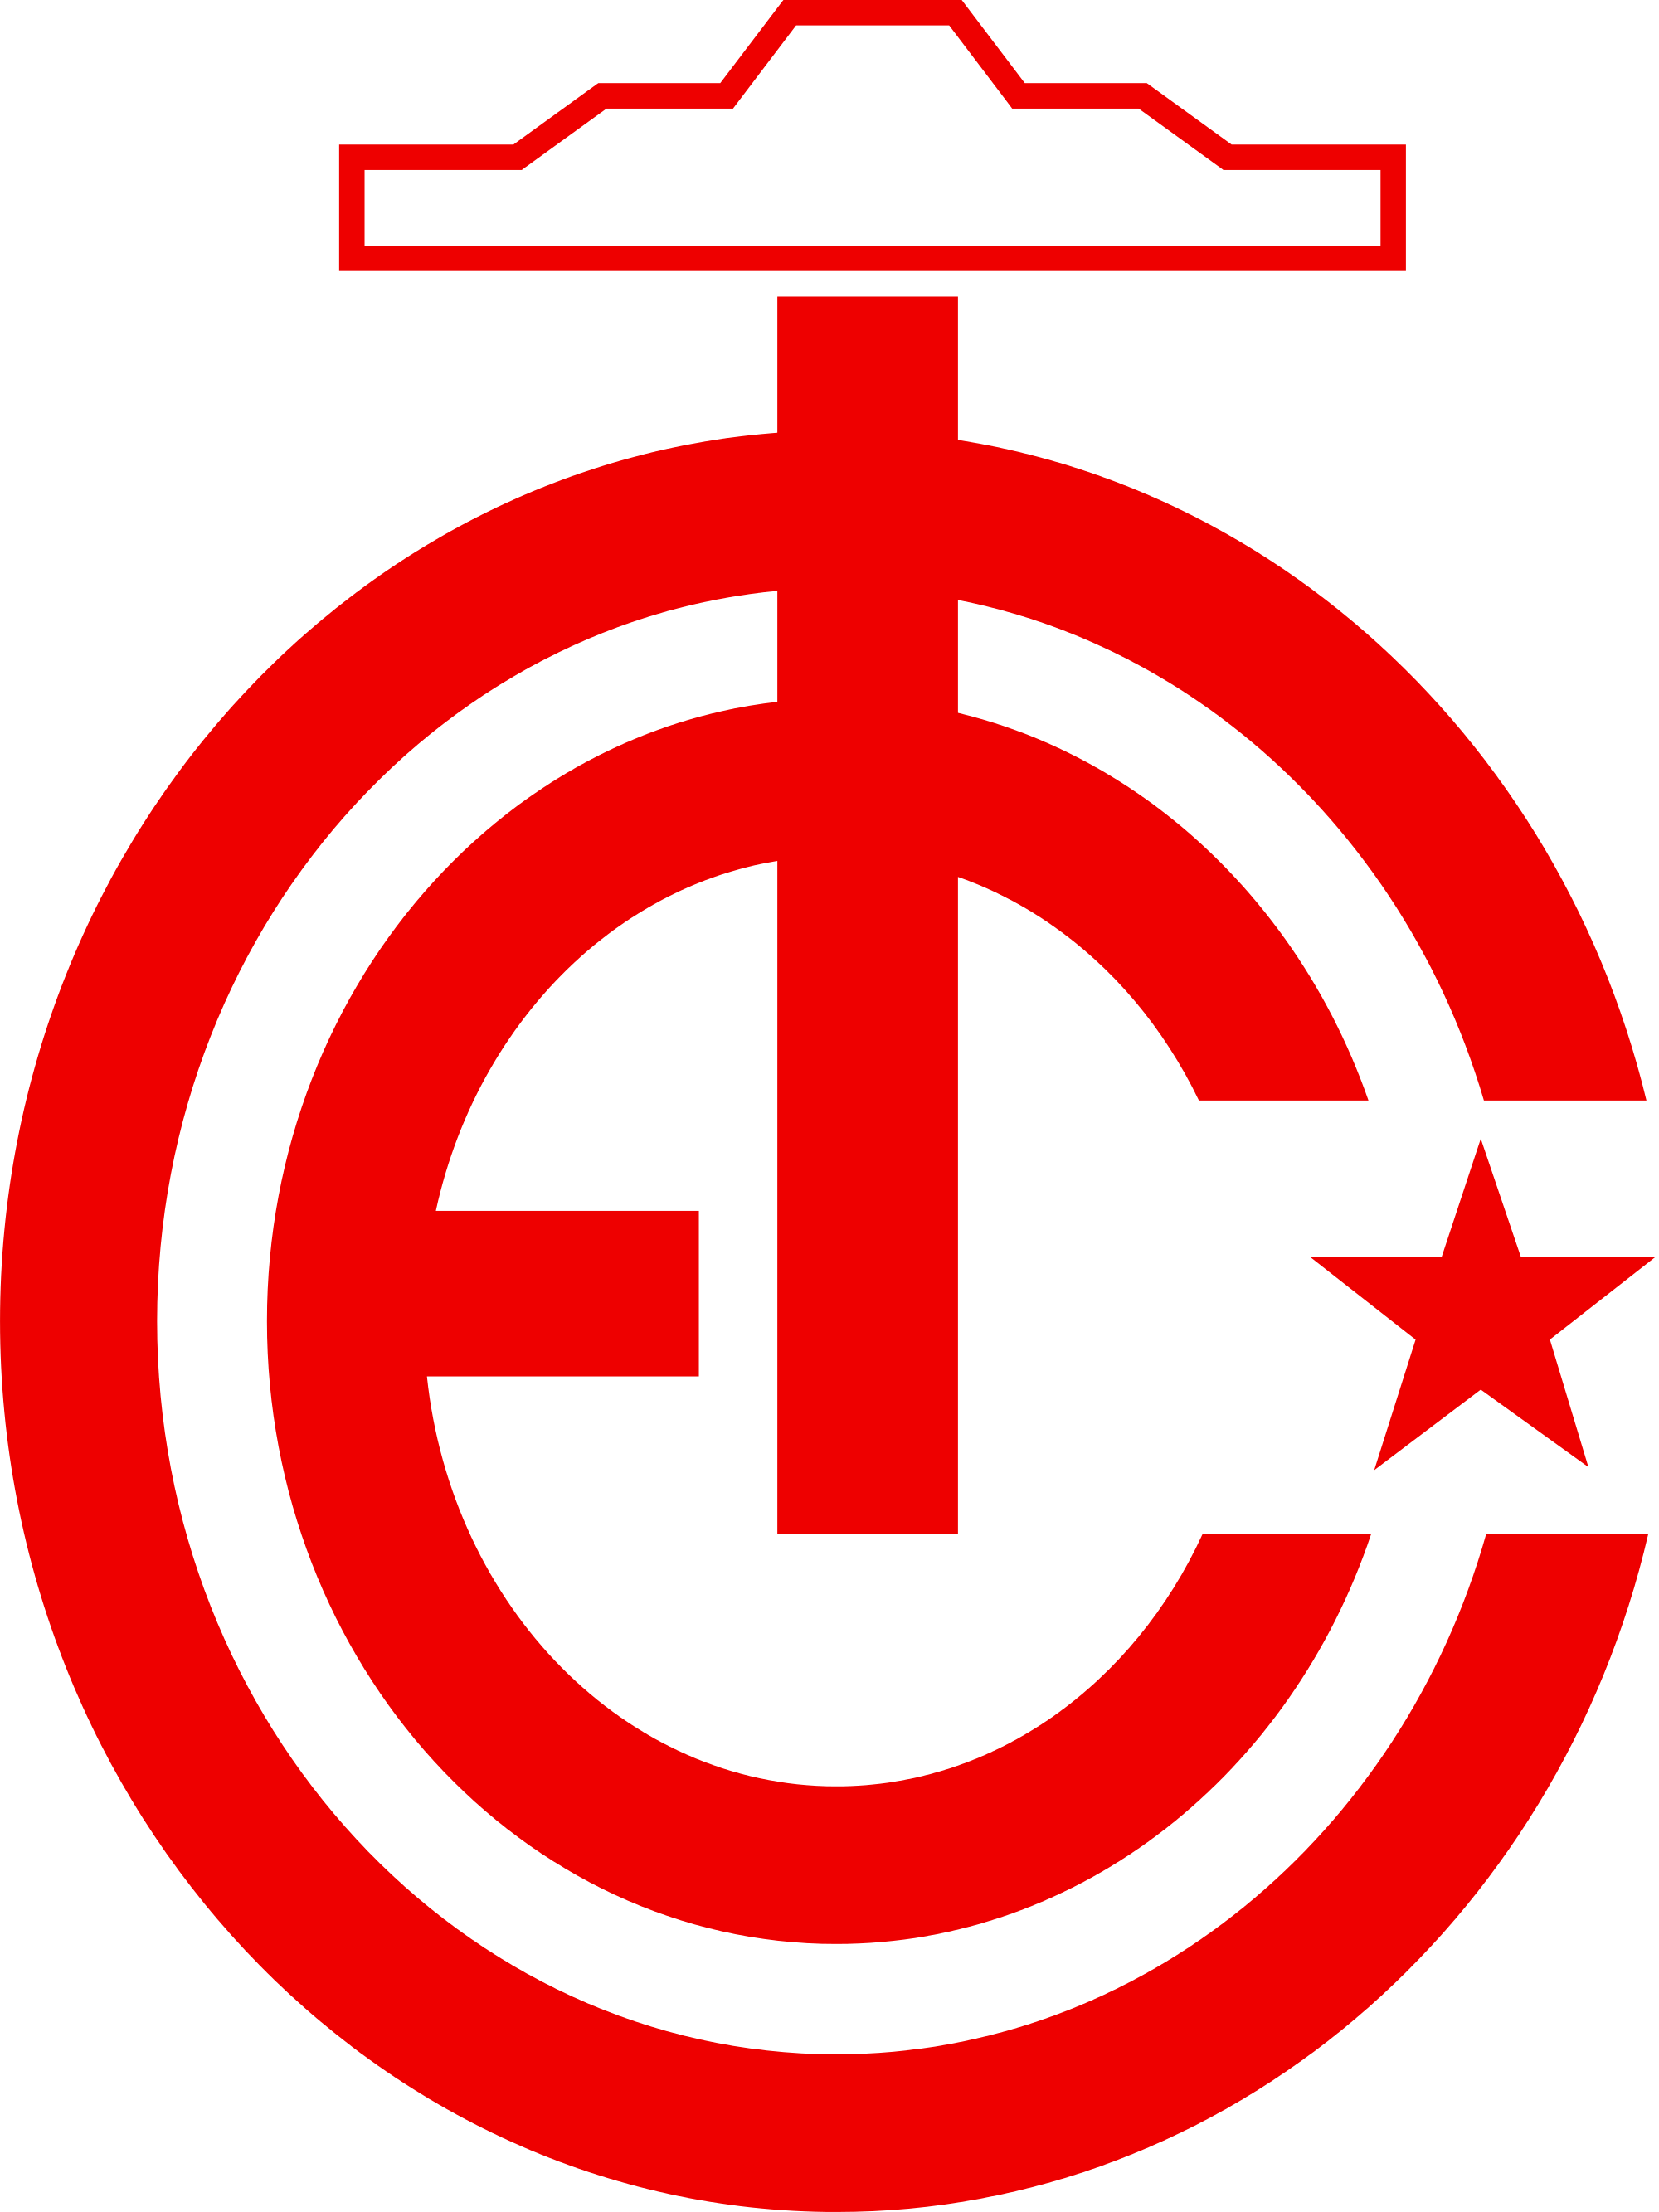 Internacional SC logo